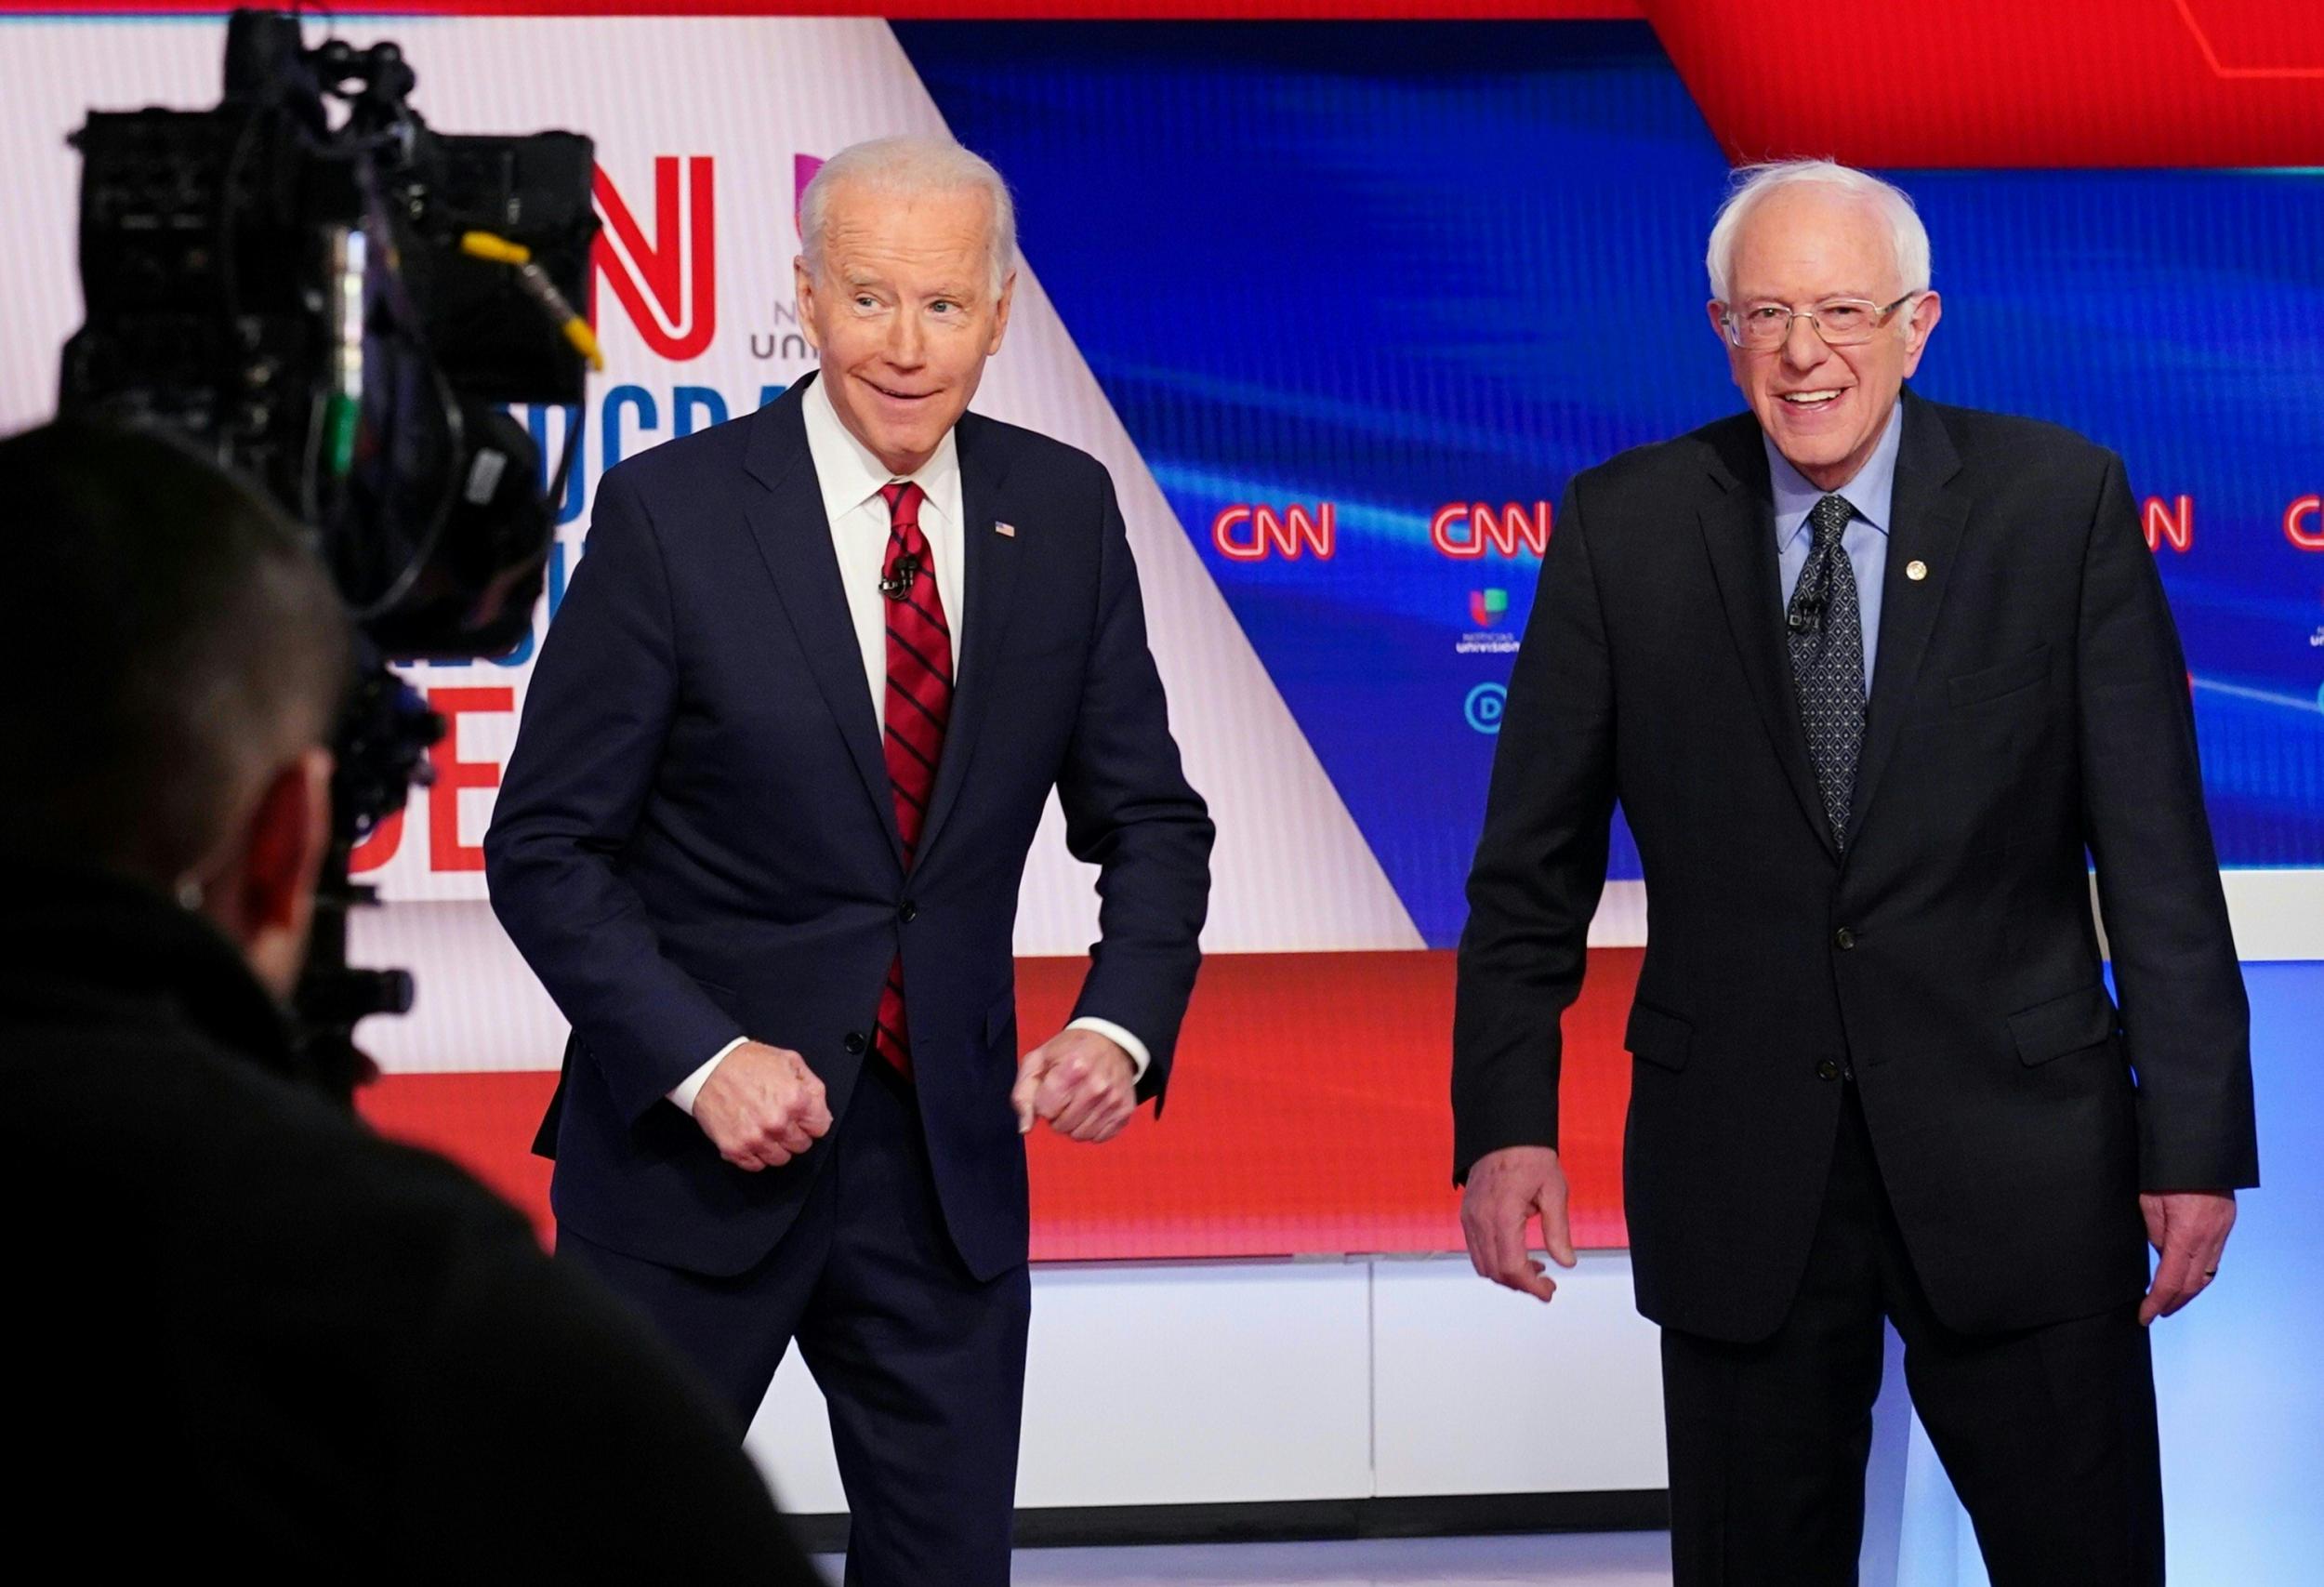 Biden and Bernie debated each other onstage Sunday night